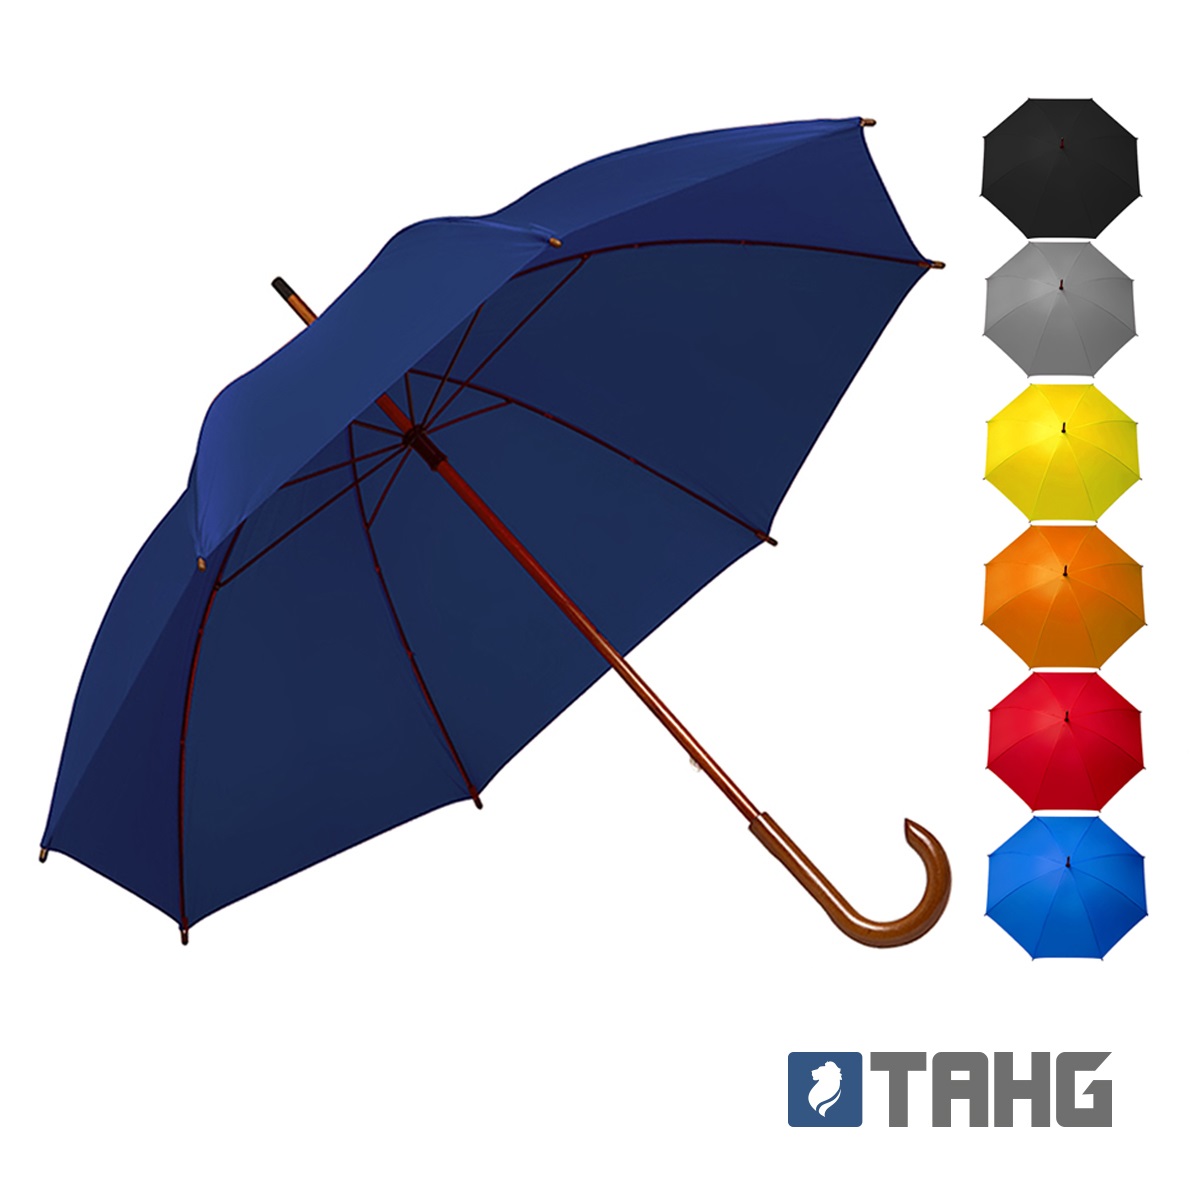 Paraguas TAHG 133 - Logo GRATIS !